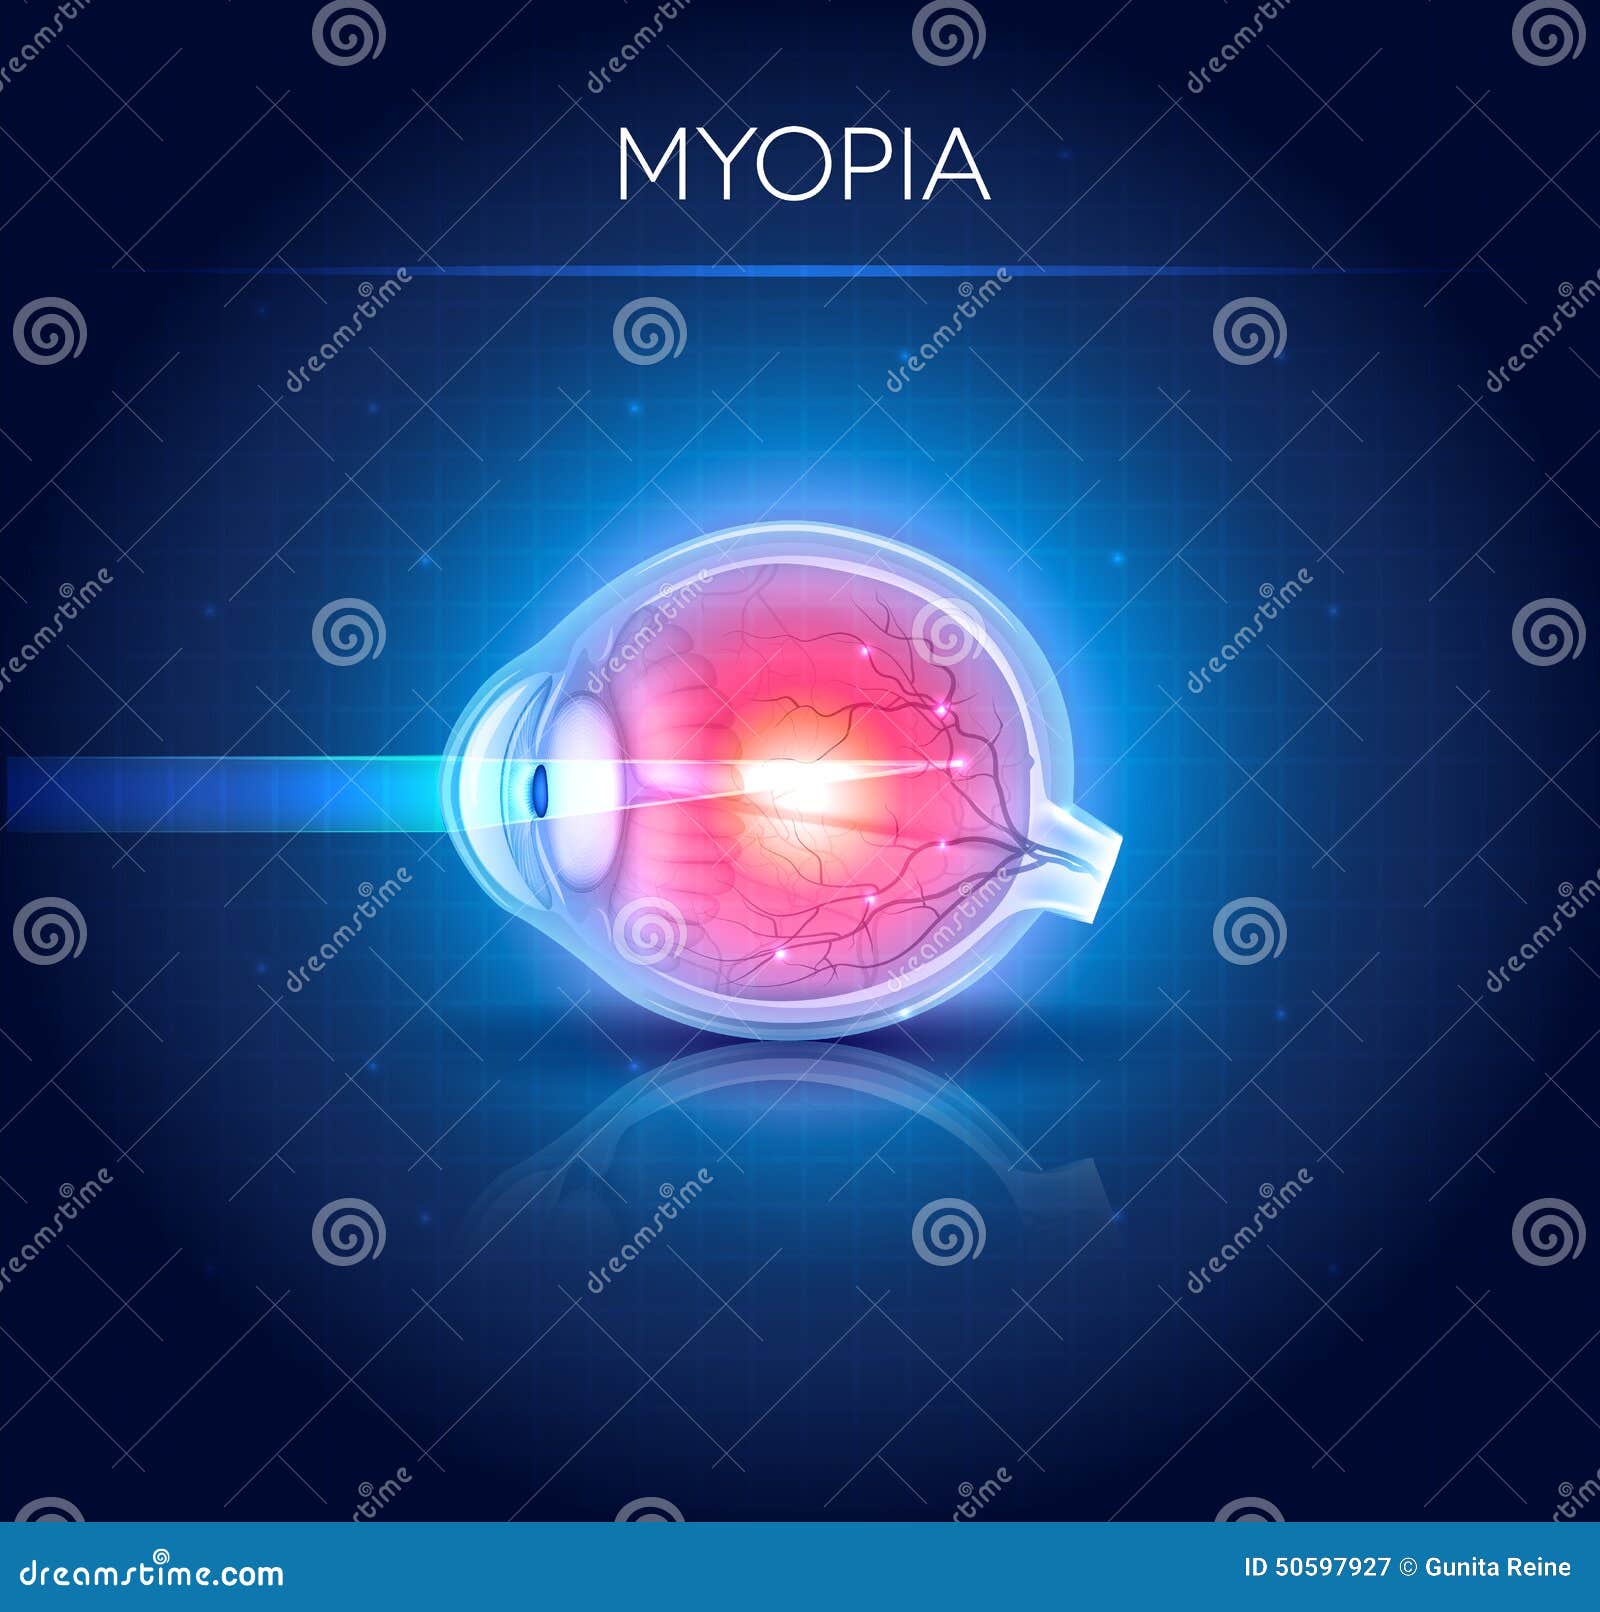 myopia eyesight disorder